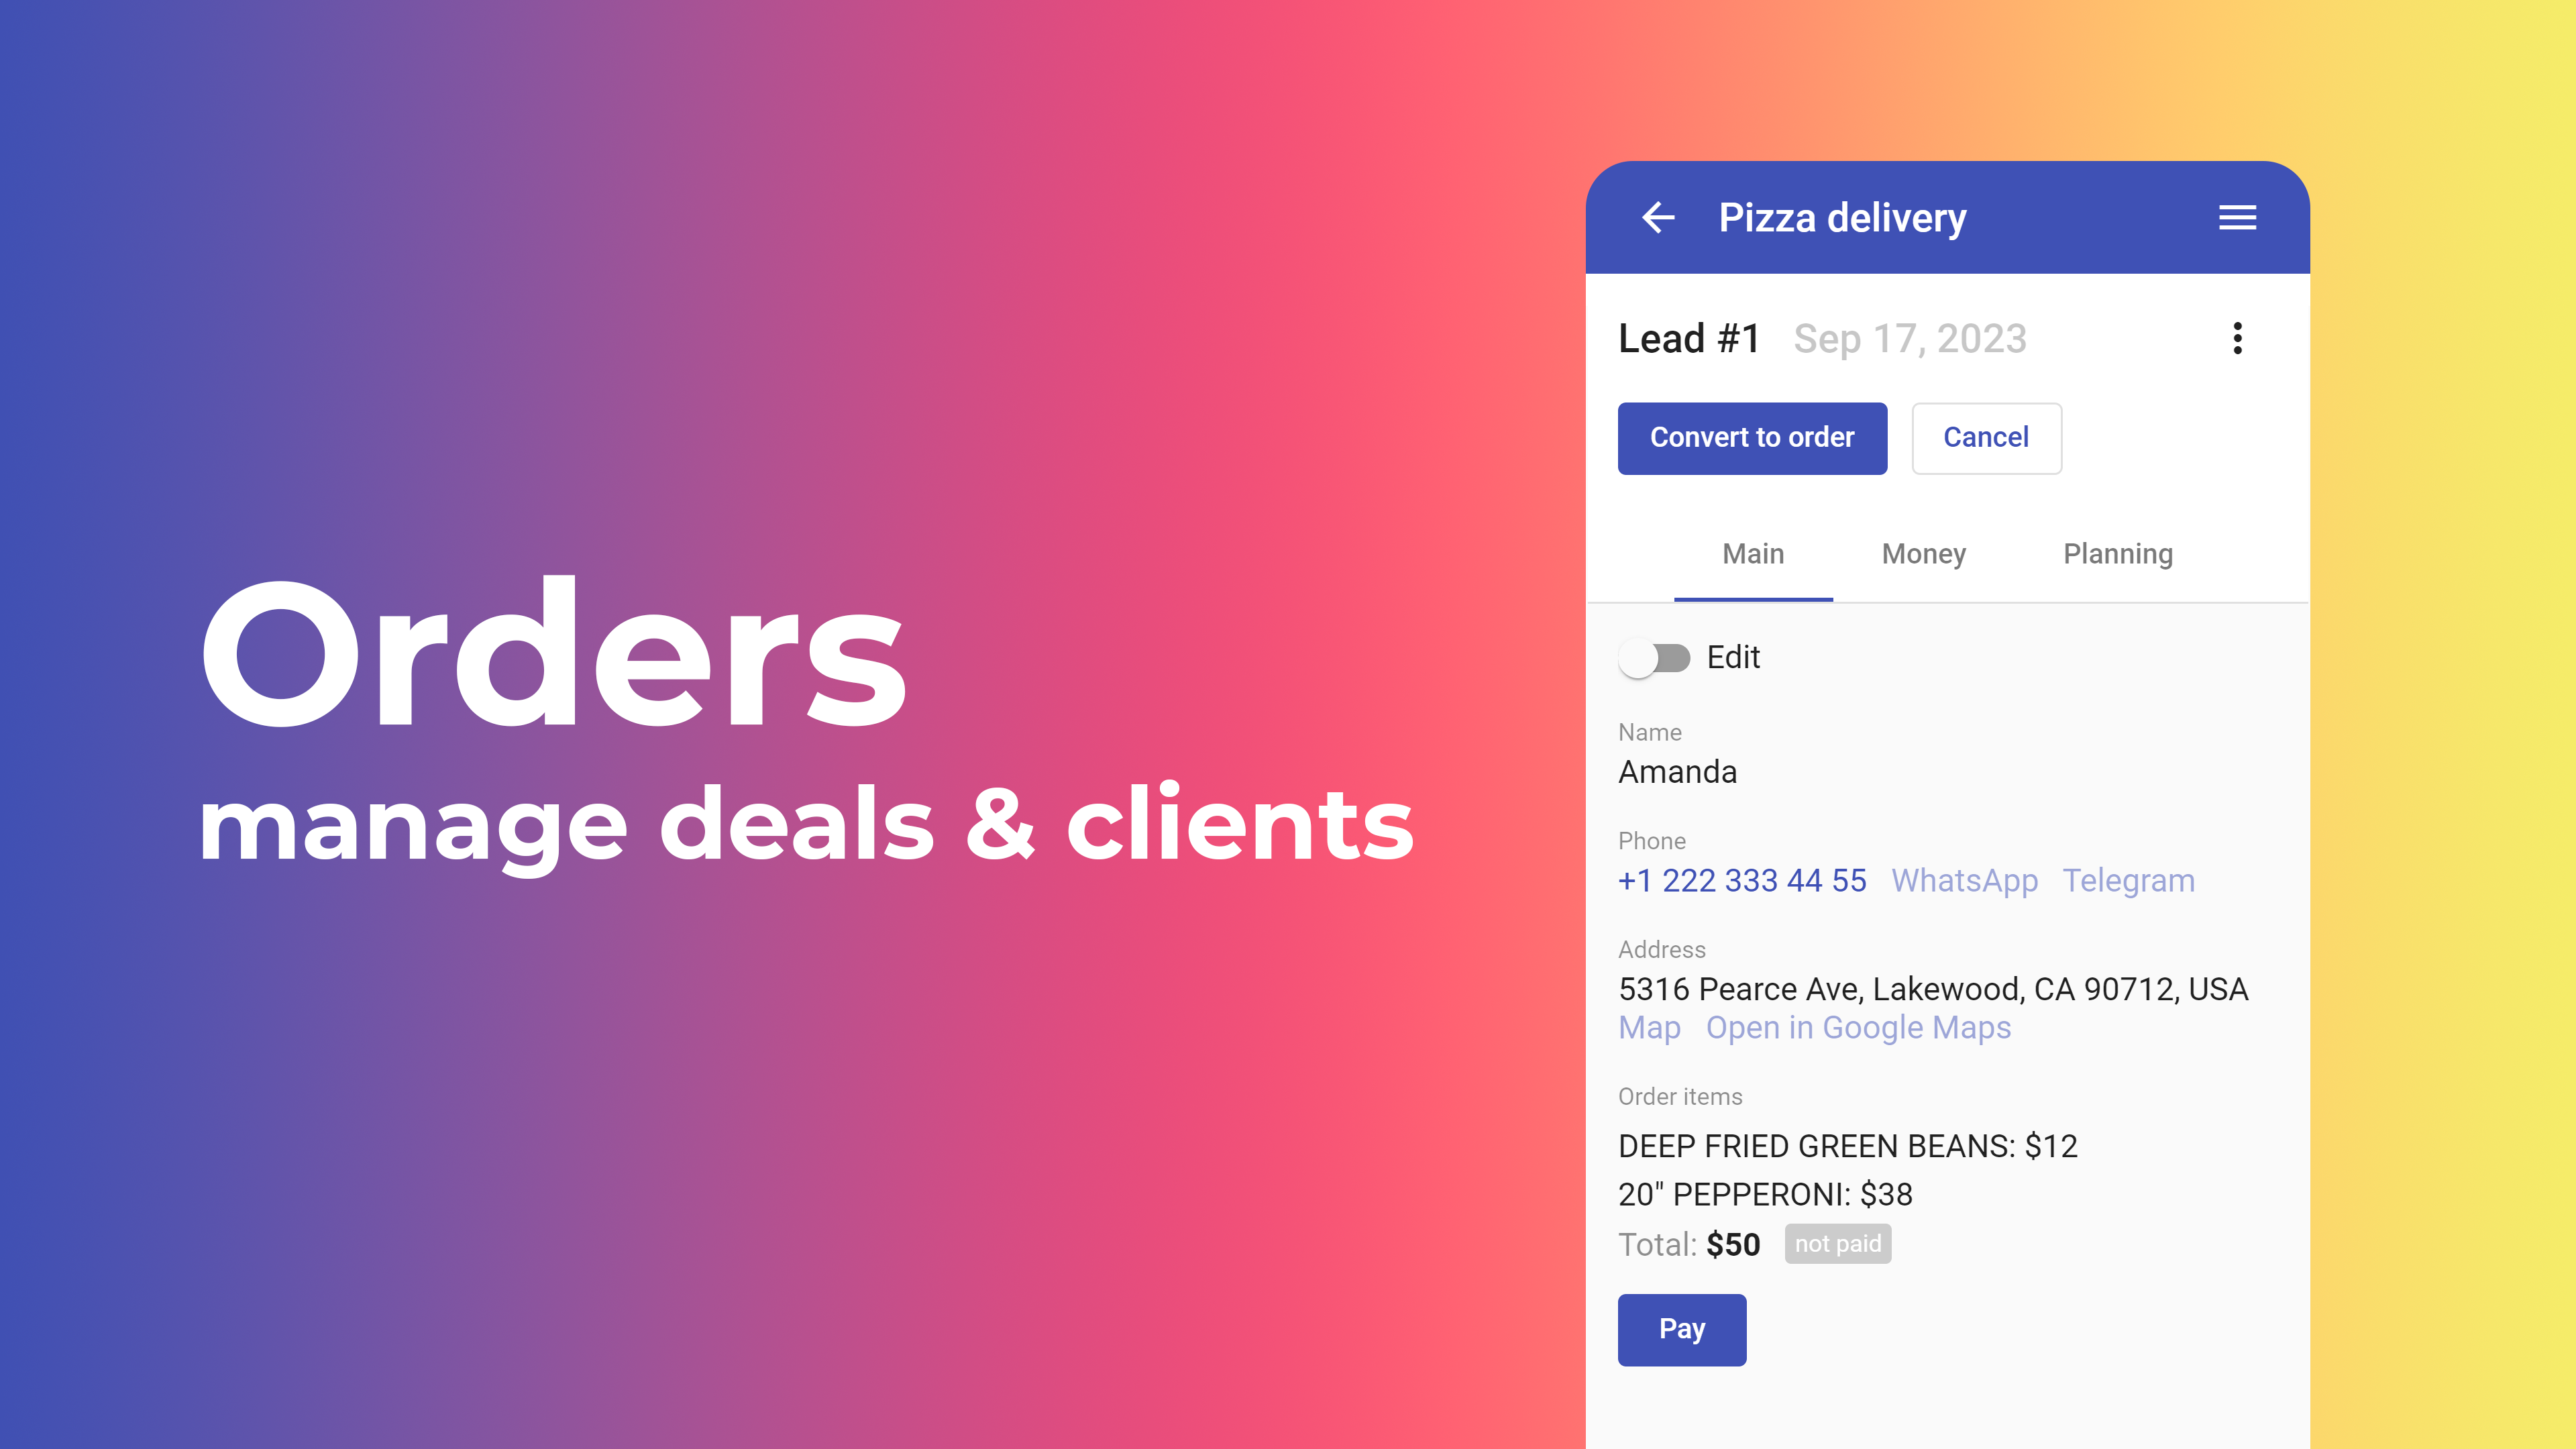 Orders: manage deals & clients